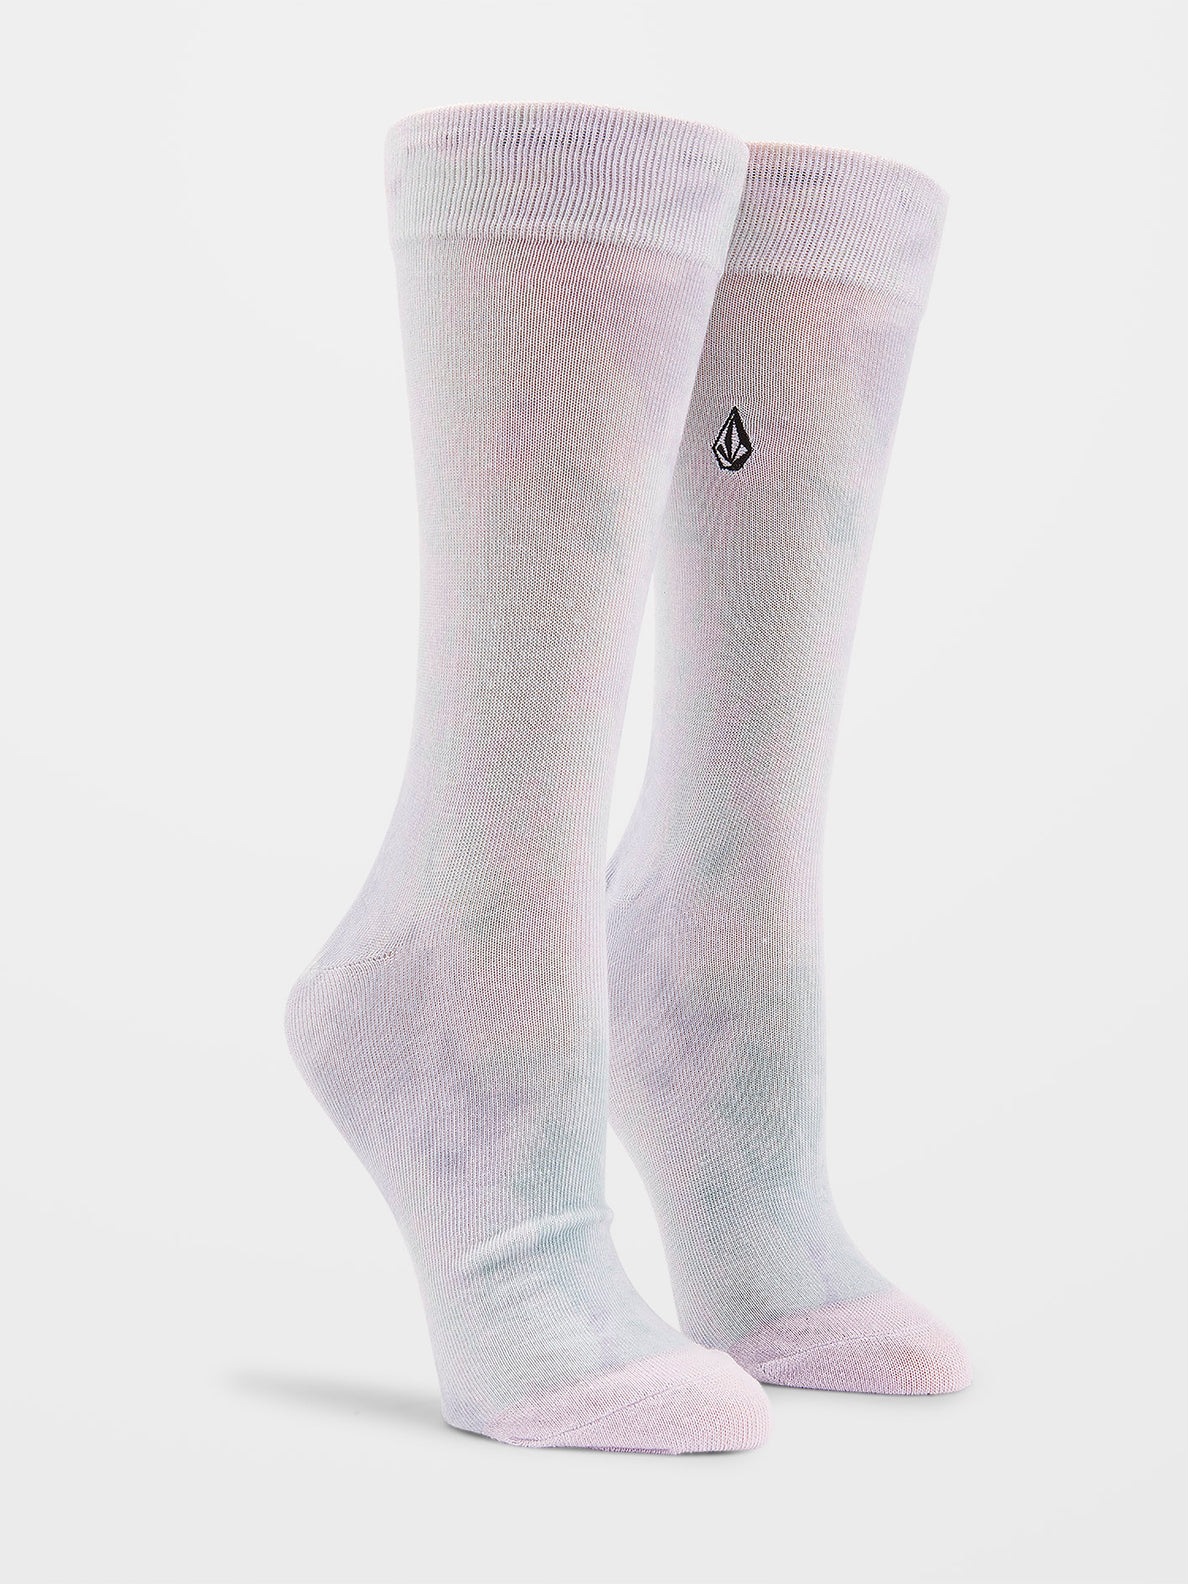 Truly Stoked Socks - STONE BLUE (E6332201_SNB) [F]